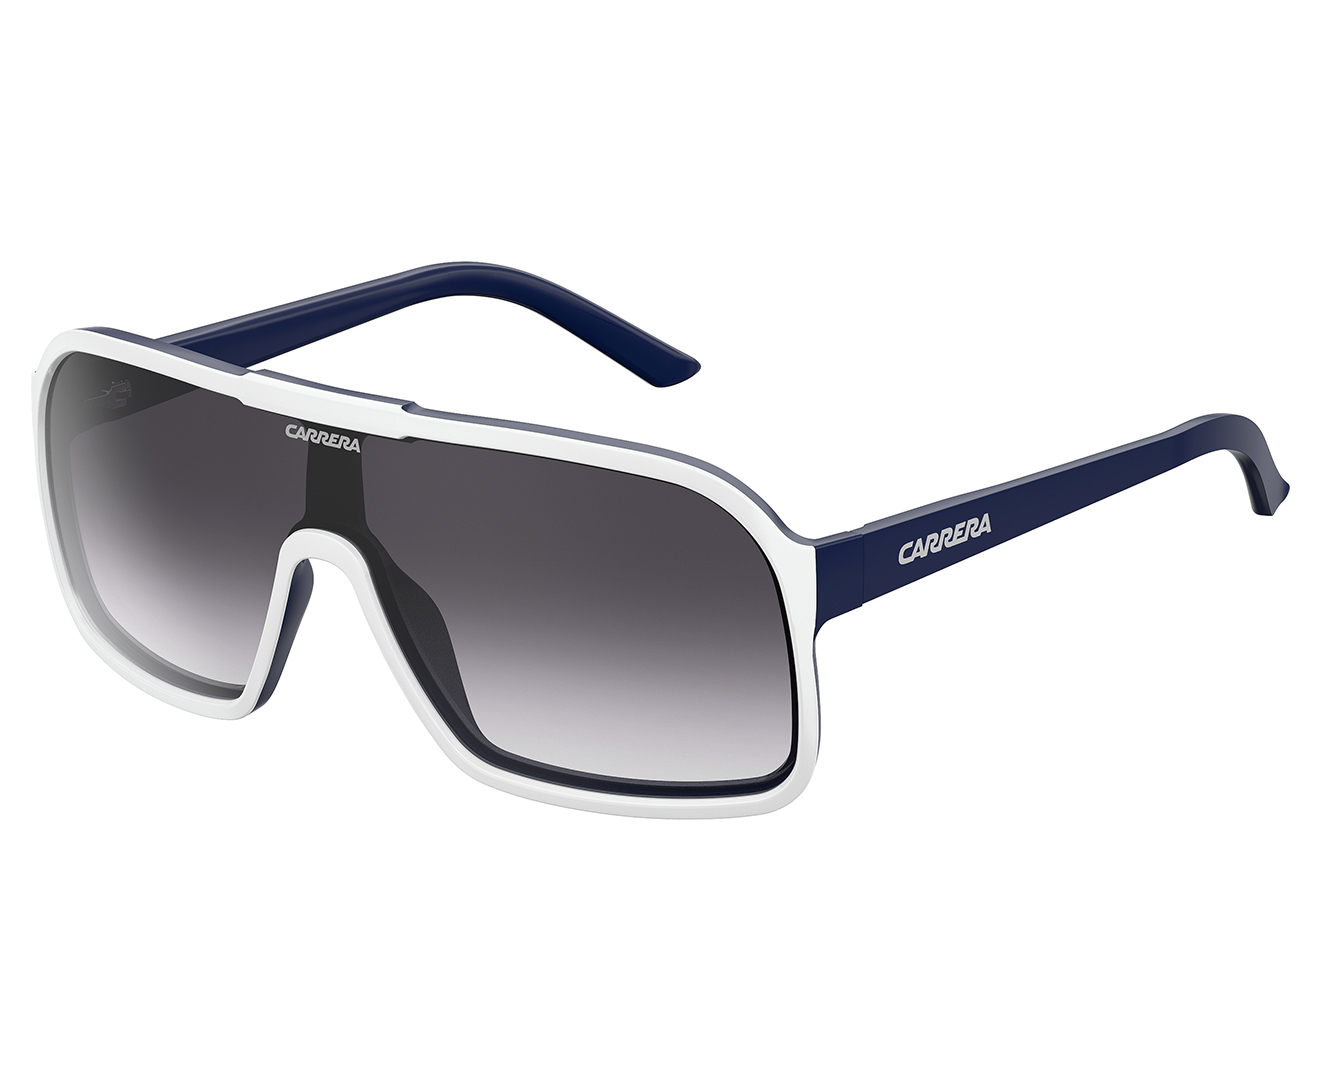 Carrera 5530 Square Sunglasses White/Blue/Grey | Www.catch.com.au